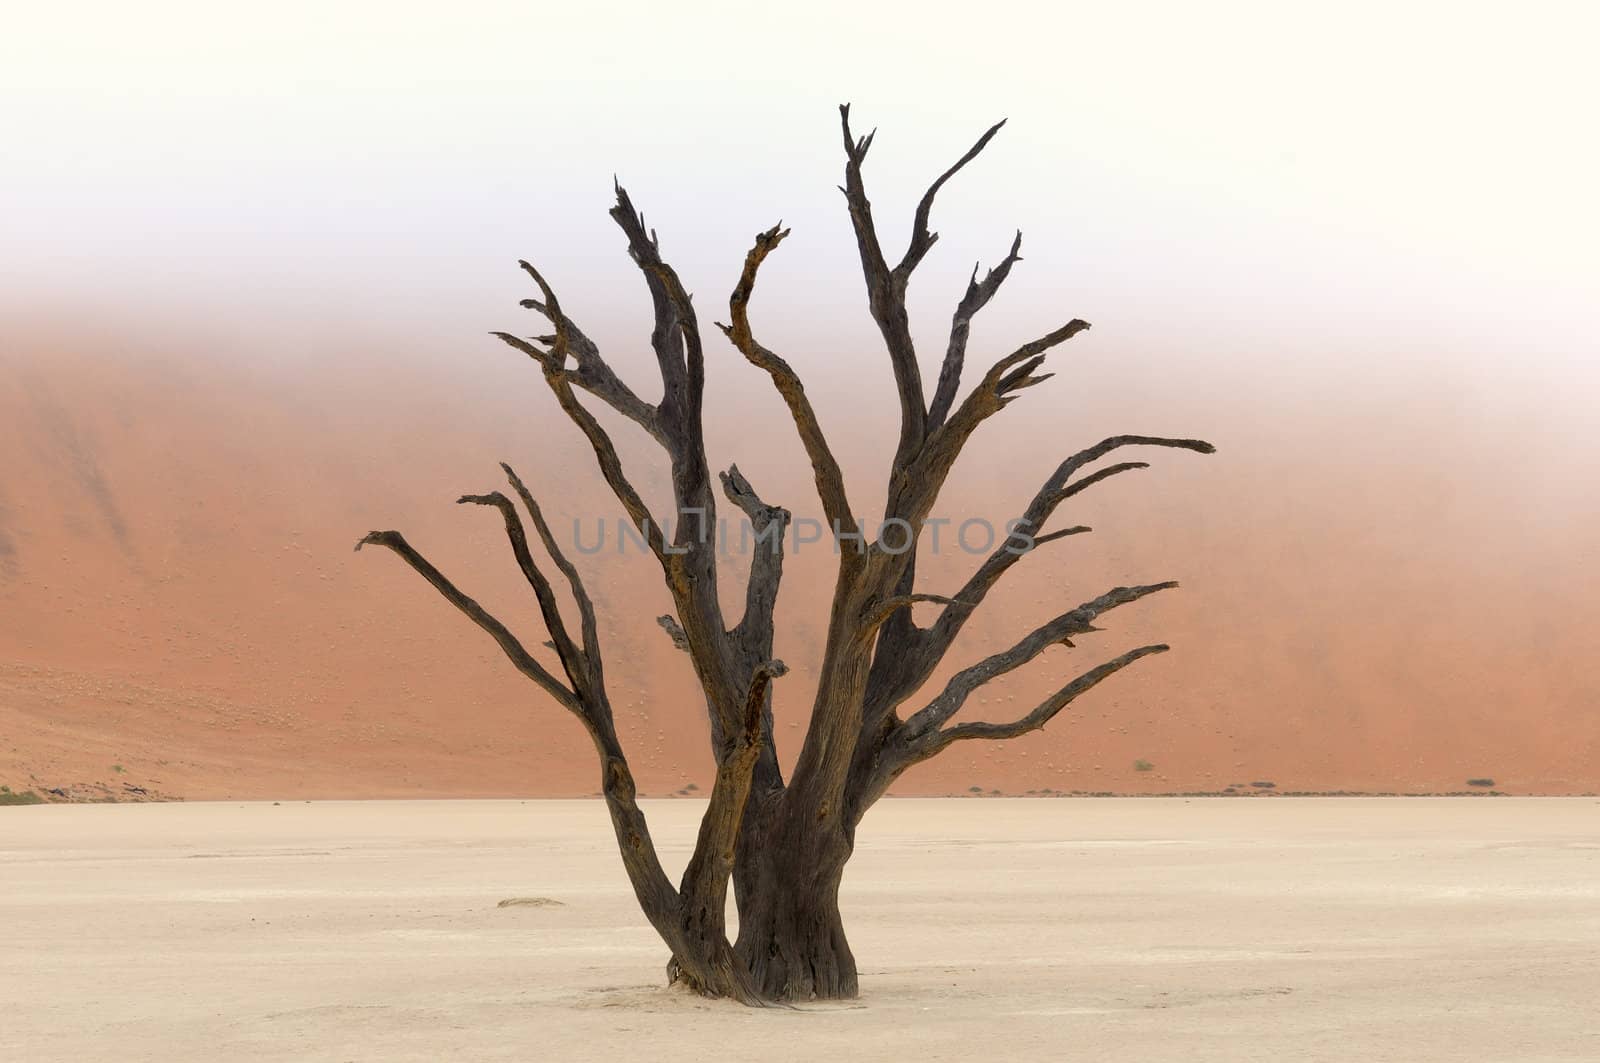 A lonely tree skeleton at Deadvlei near Sossusvlei, Namibia